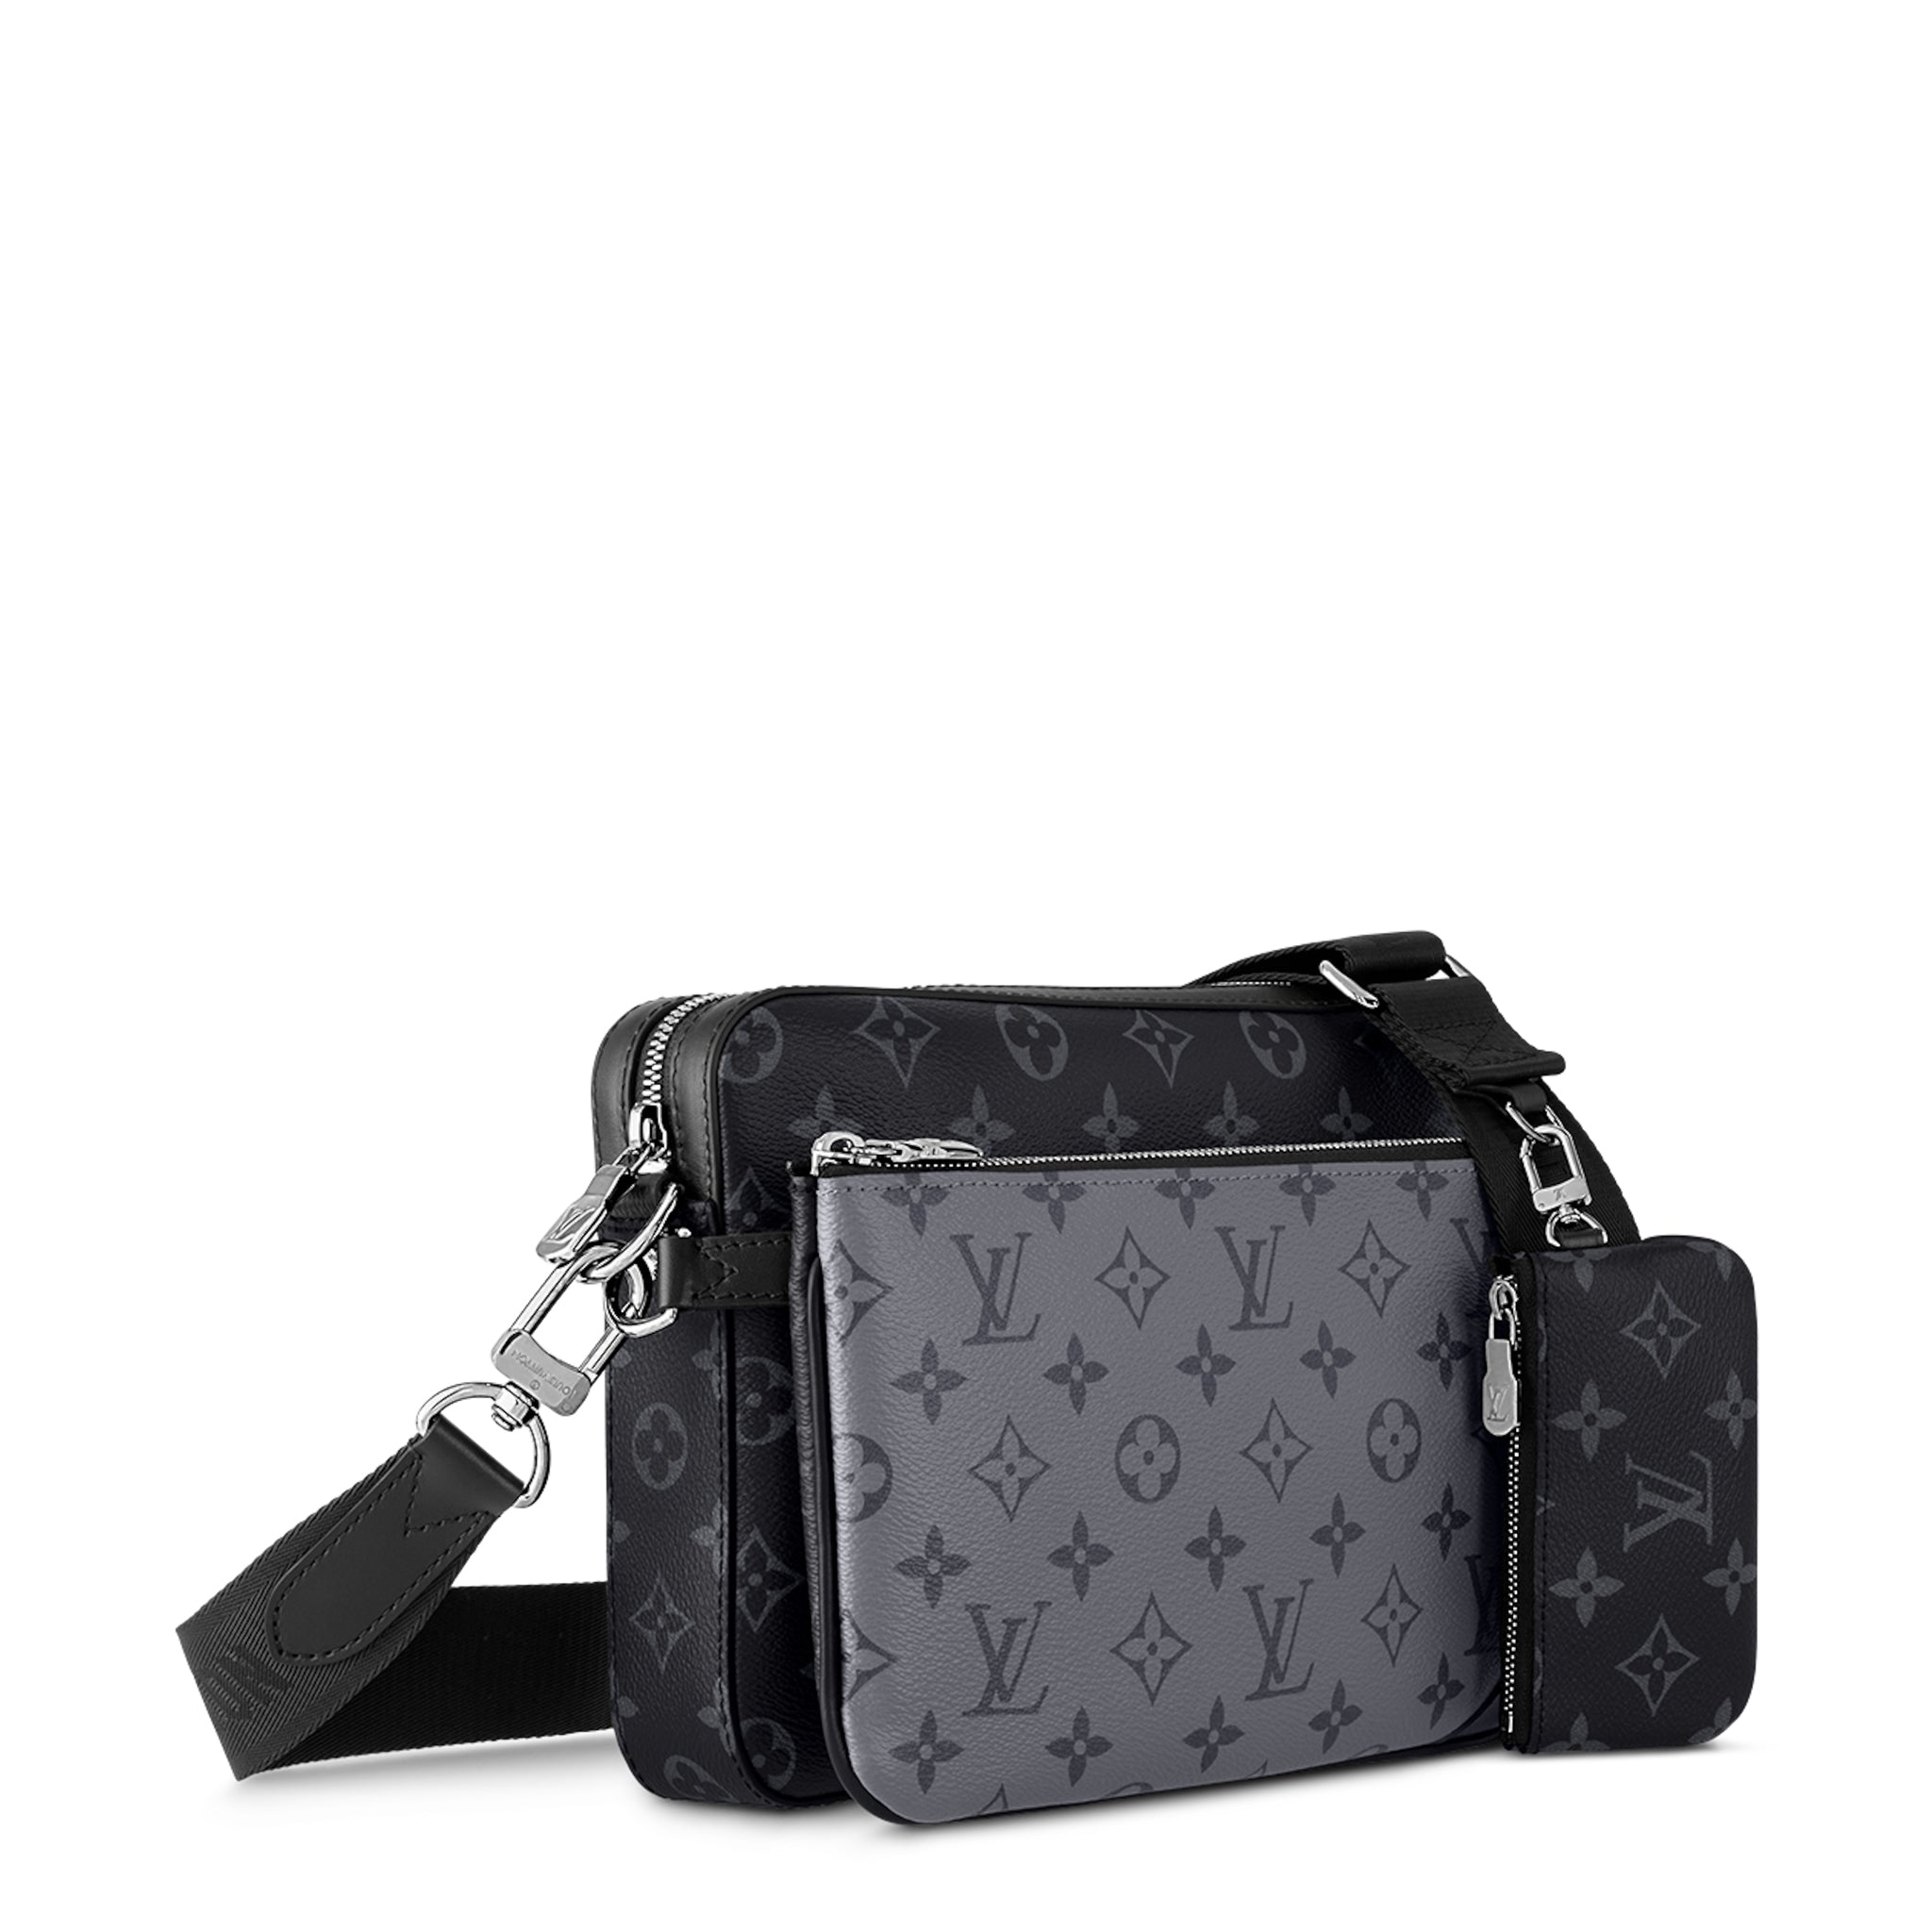 Side view of Louis Vuitton Monogram Trio Messenger Bag Black Grey NVPROD2320039V